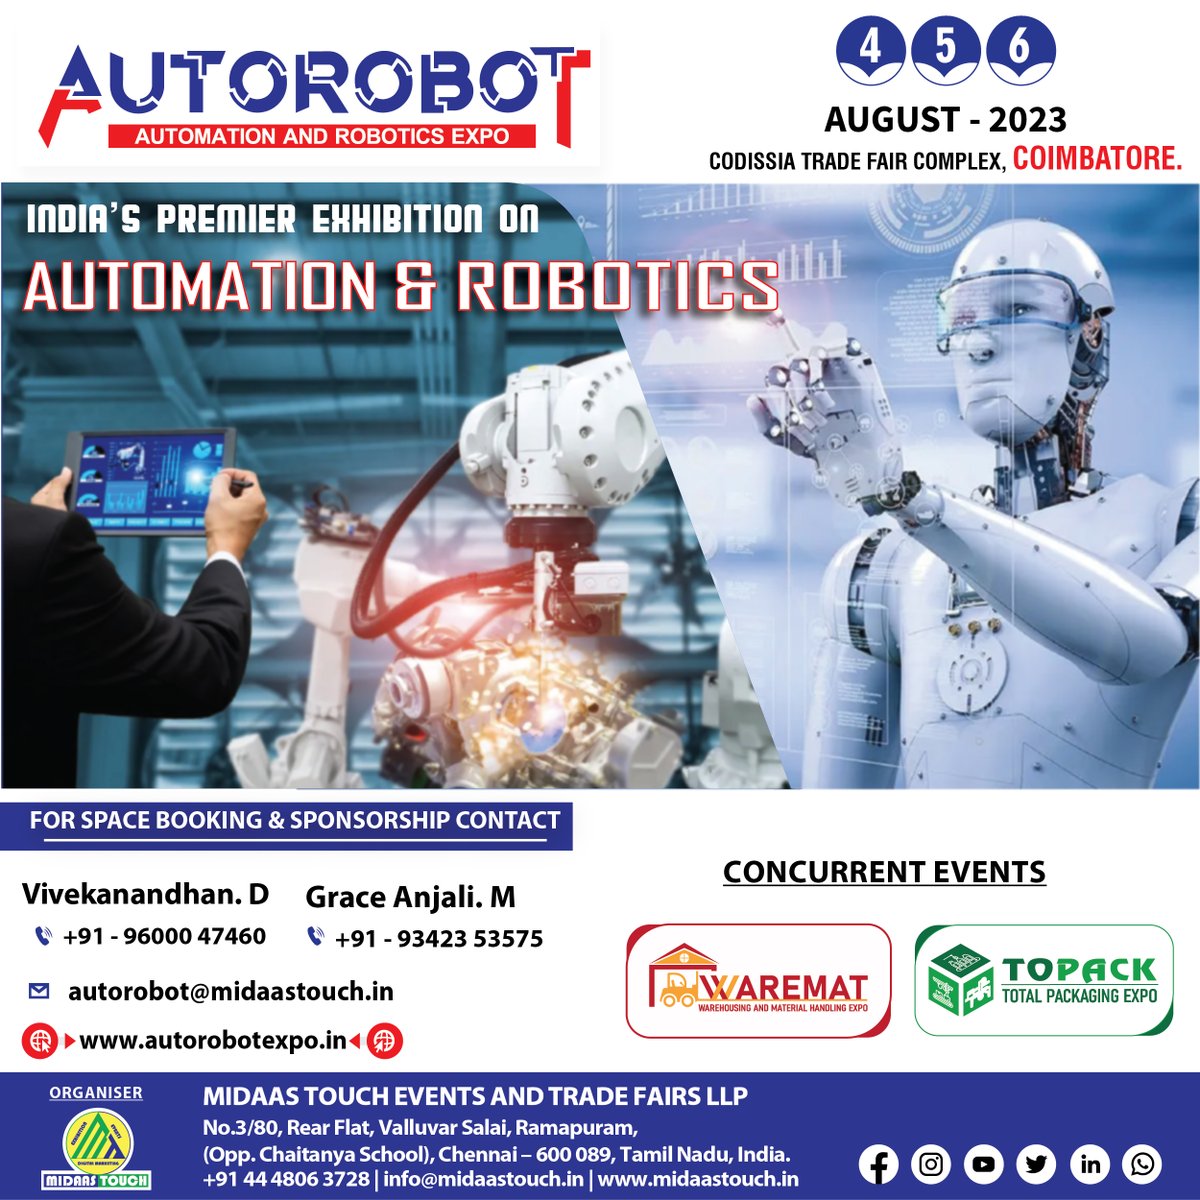 #automation #robotics #AutoRobot
lnkd.in/gcxvTSy4
▫️
#automationsolutions #automationindustry #robot #automation #robotics #automobile #ai #industrialautomation #machining #control #automationexpo #innovation #artificialintelligence #machinelearning #automationengineering